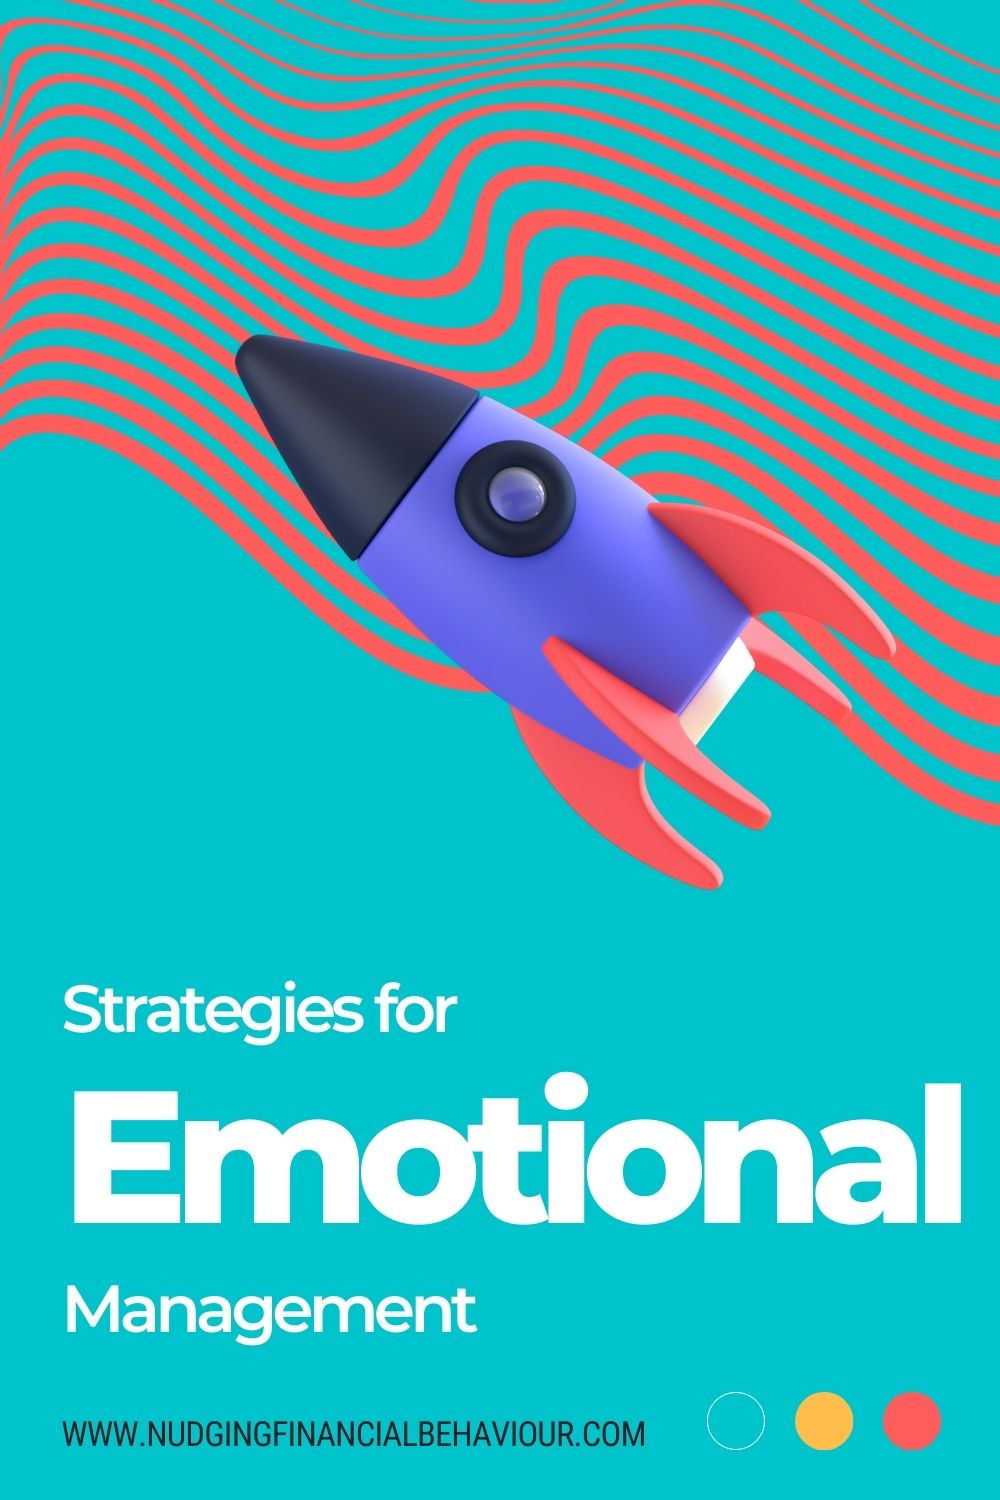 Strategies for emotional management